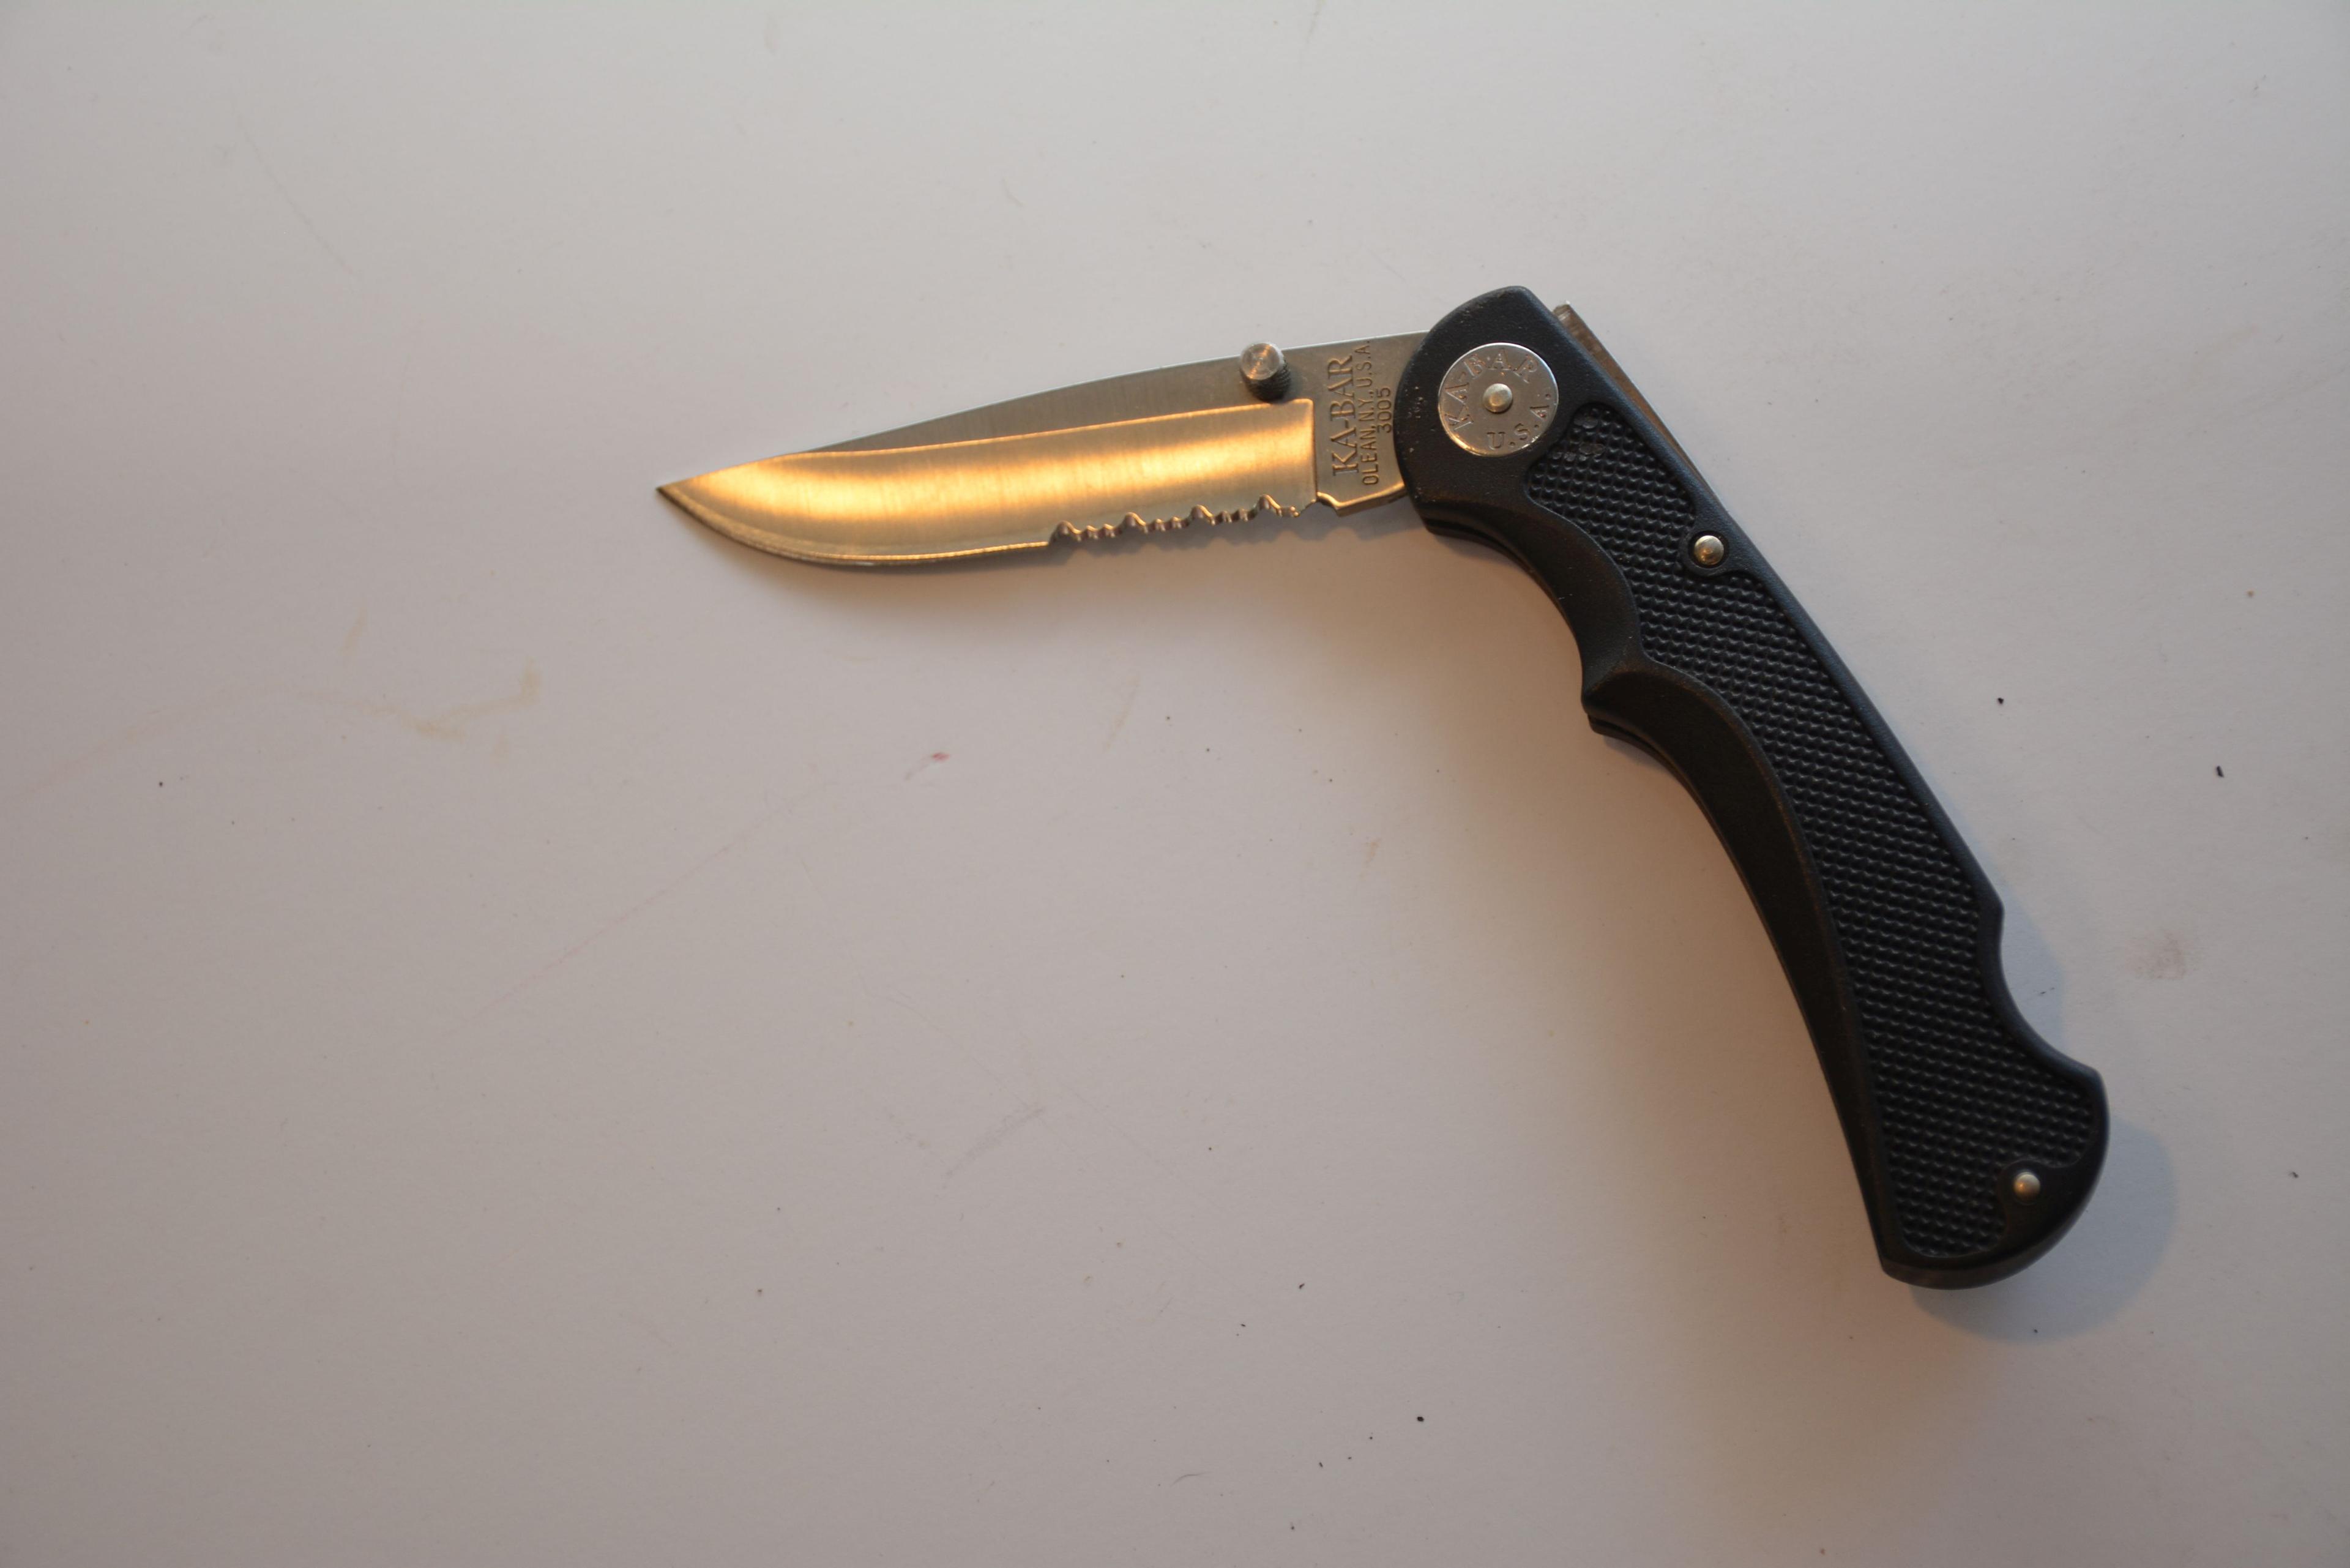 Ka-bar Pocket Knife - 4" Blade'